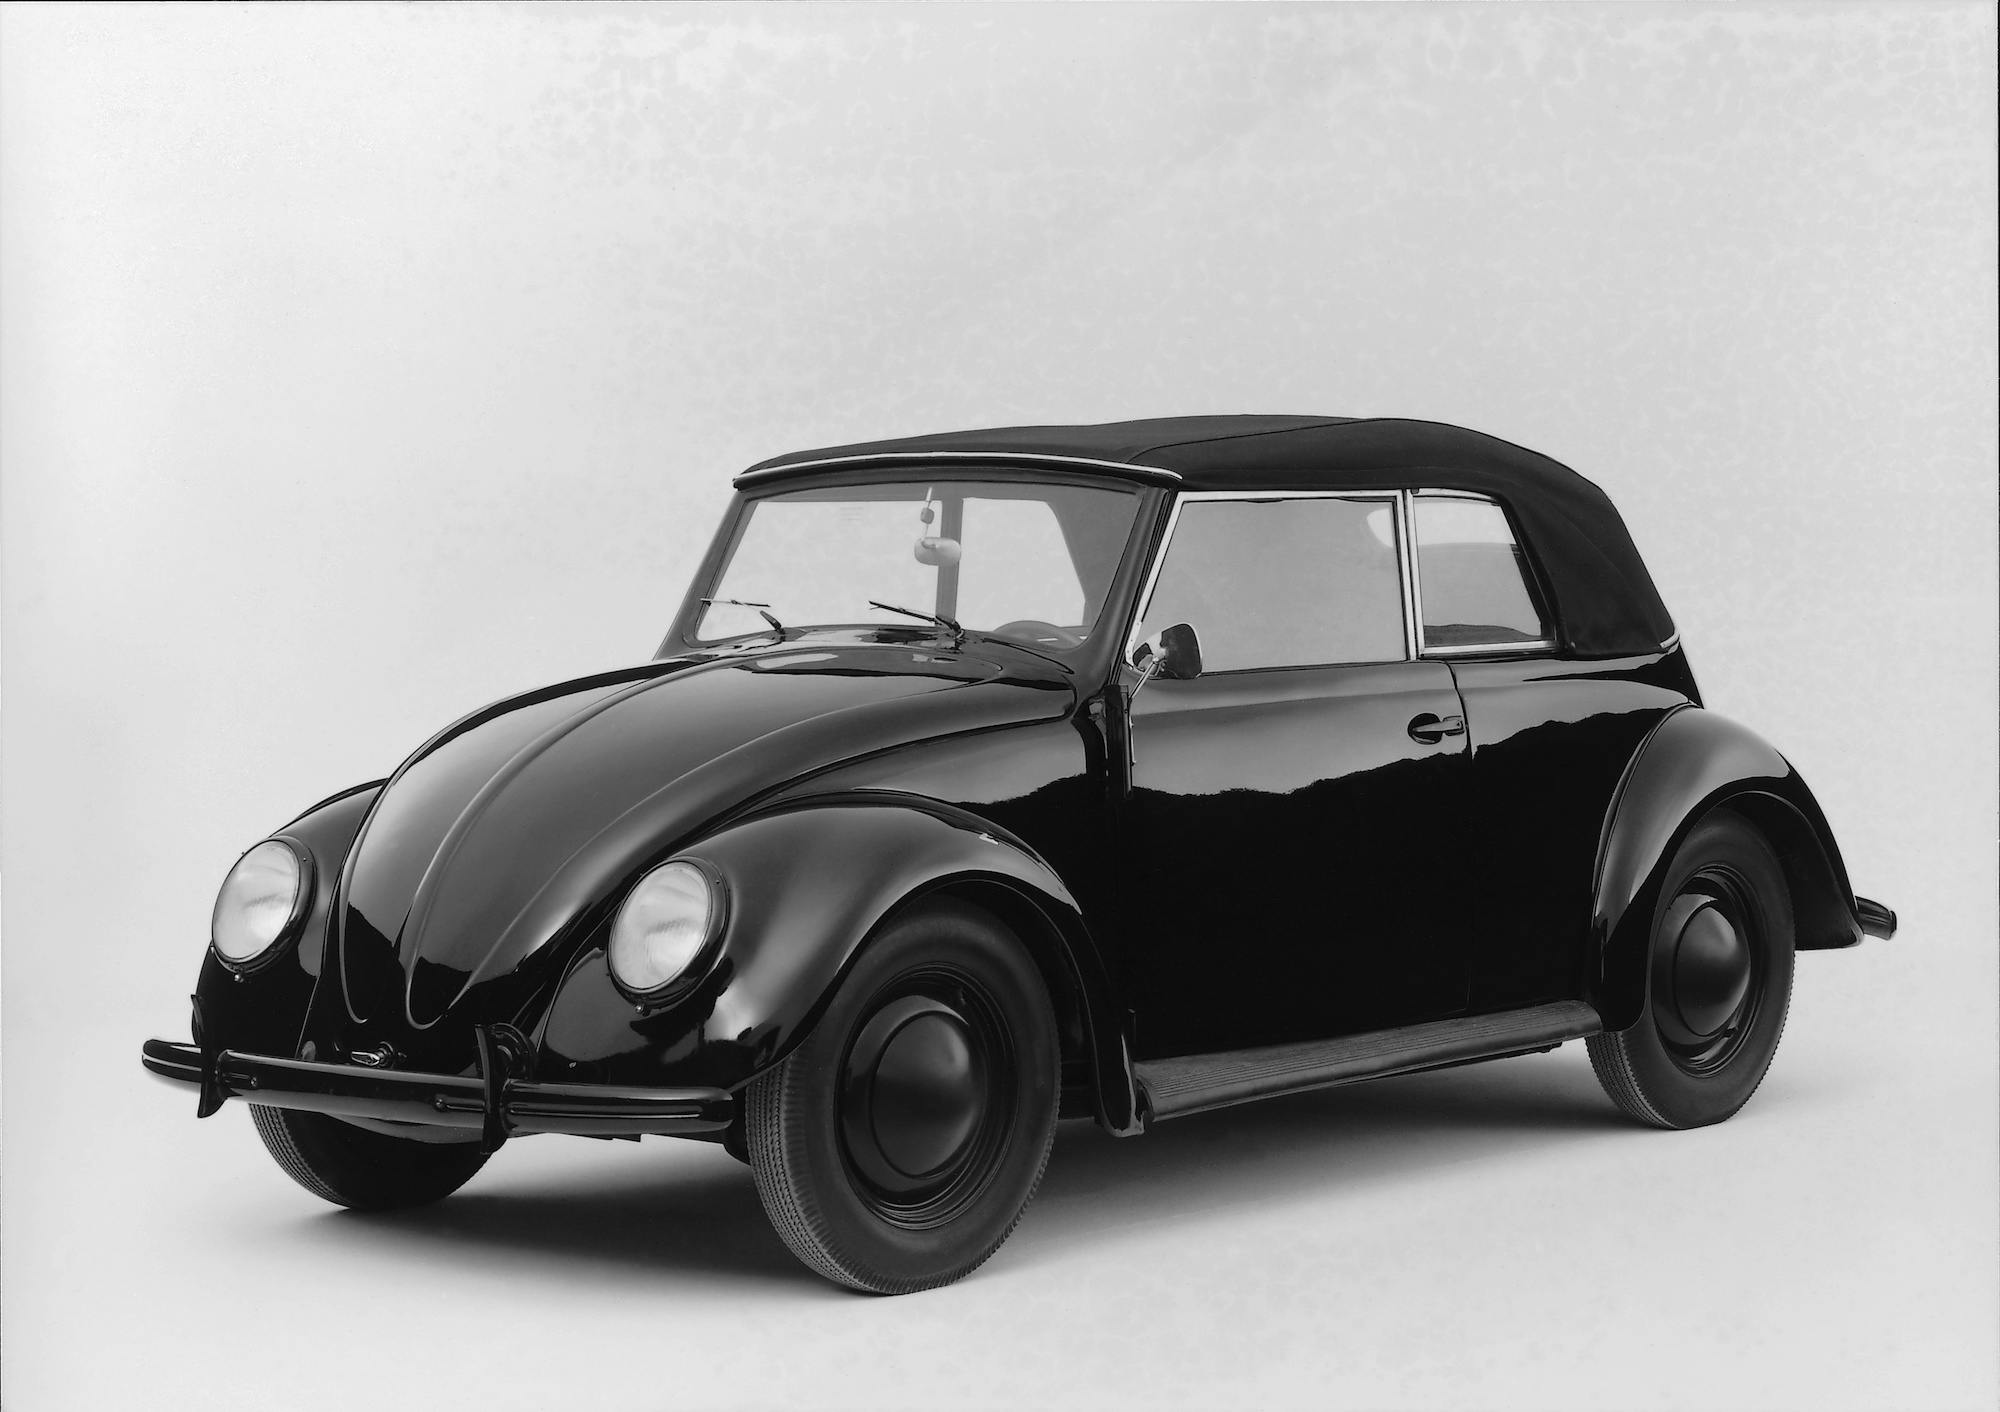 Early Volkswagen Beetle cabrio